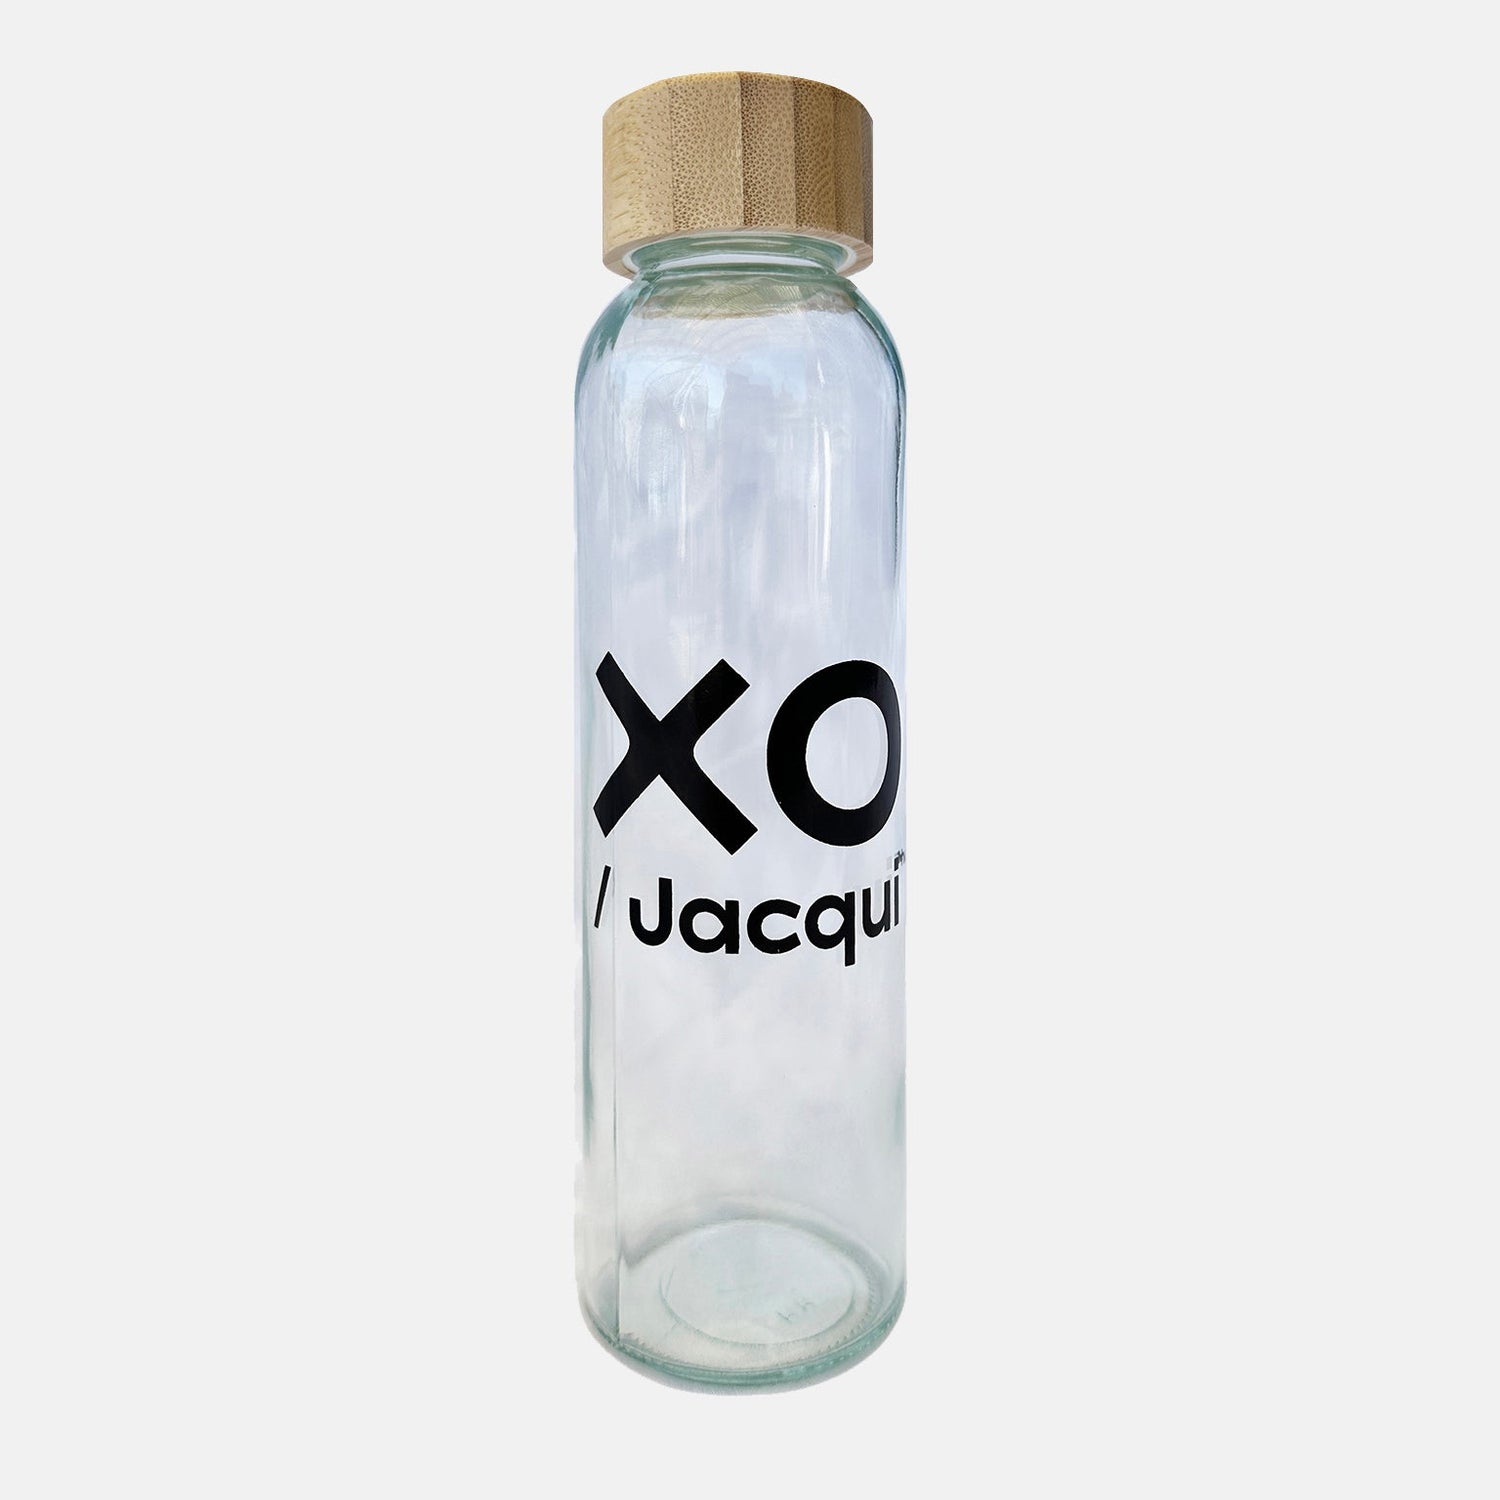 Menopositive Merch | Smoothie-to-Go Shaker Bottle - XO Jacqui